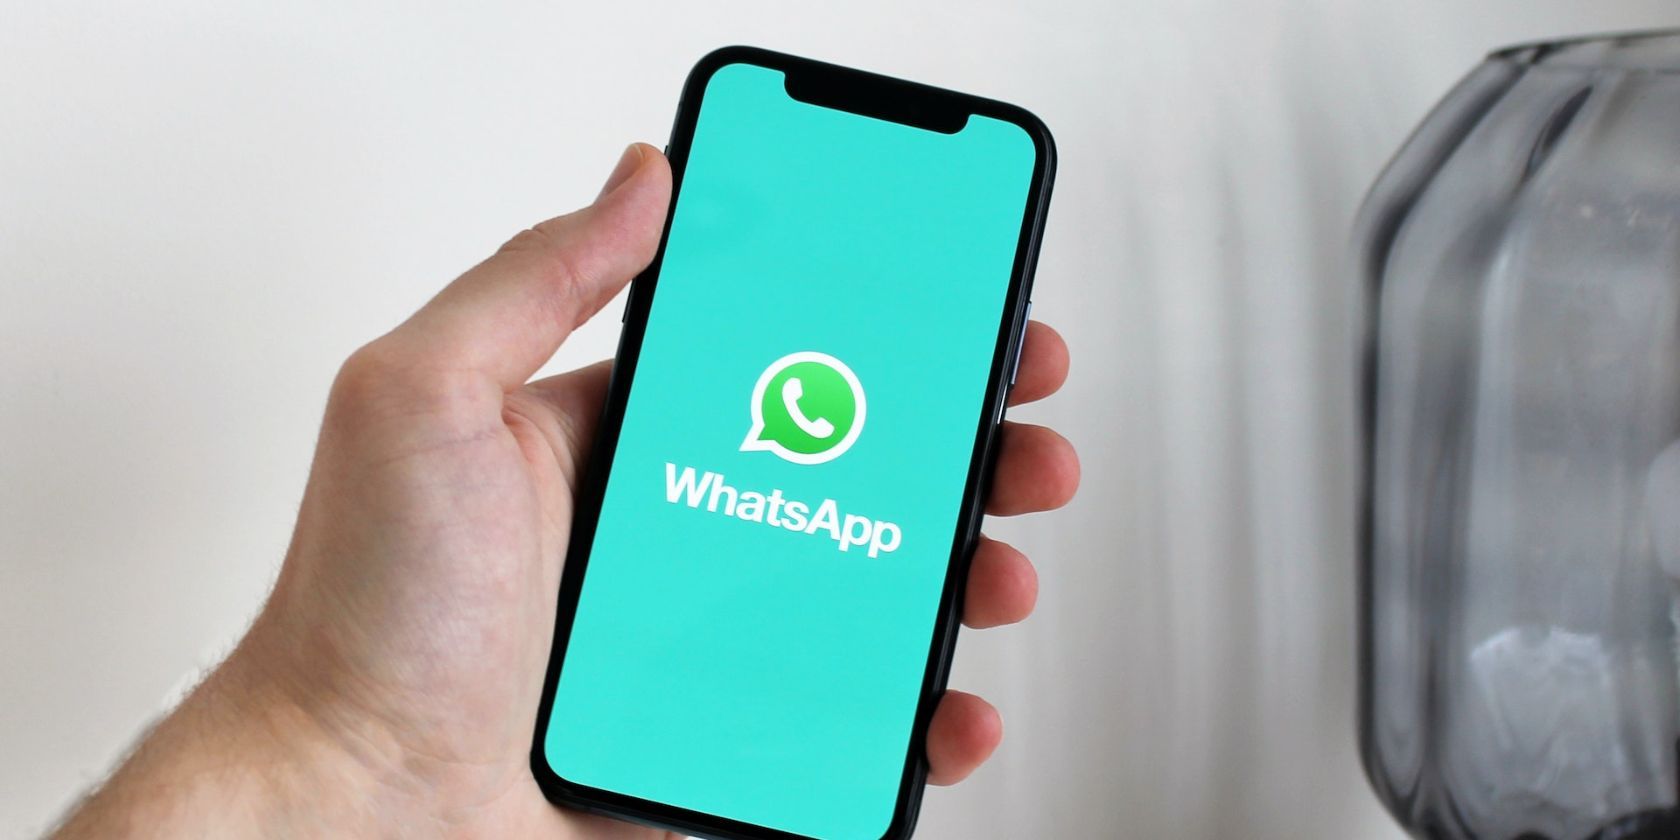 WhatsApp logo on phone screen